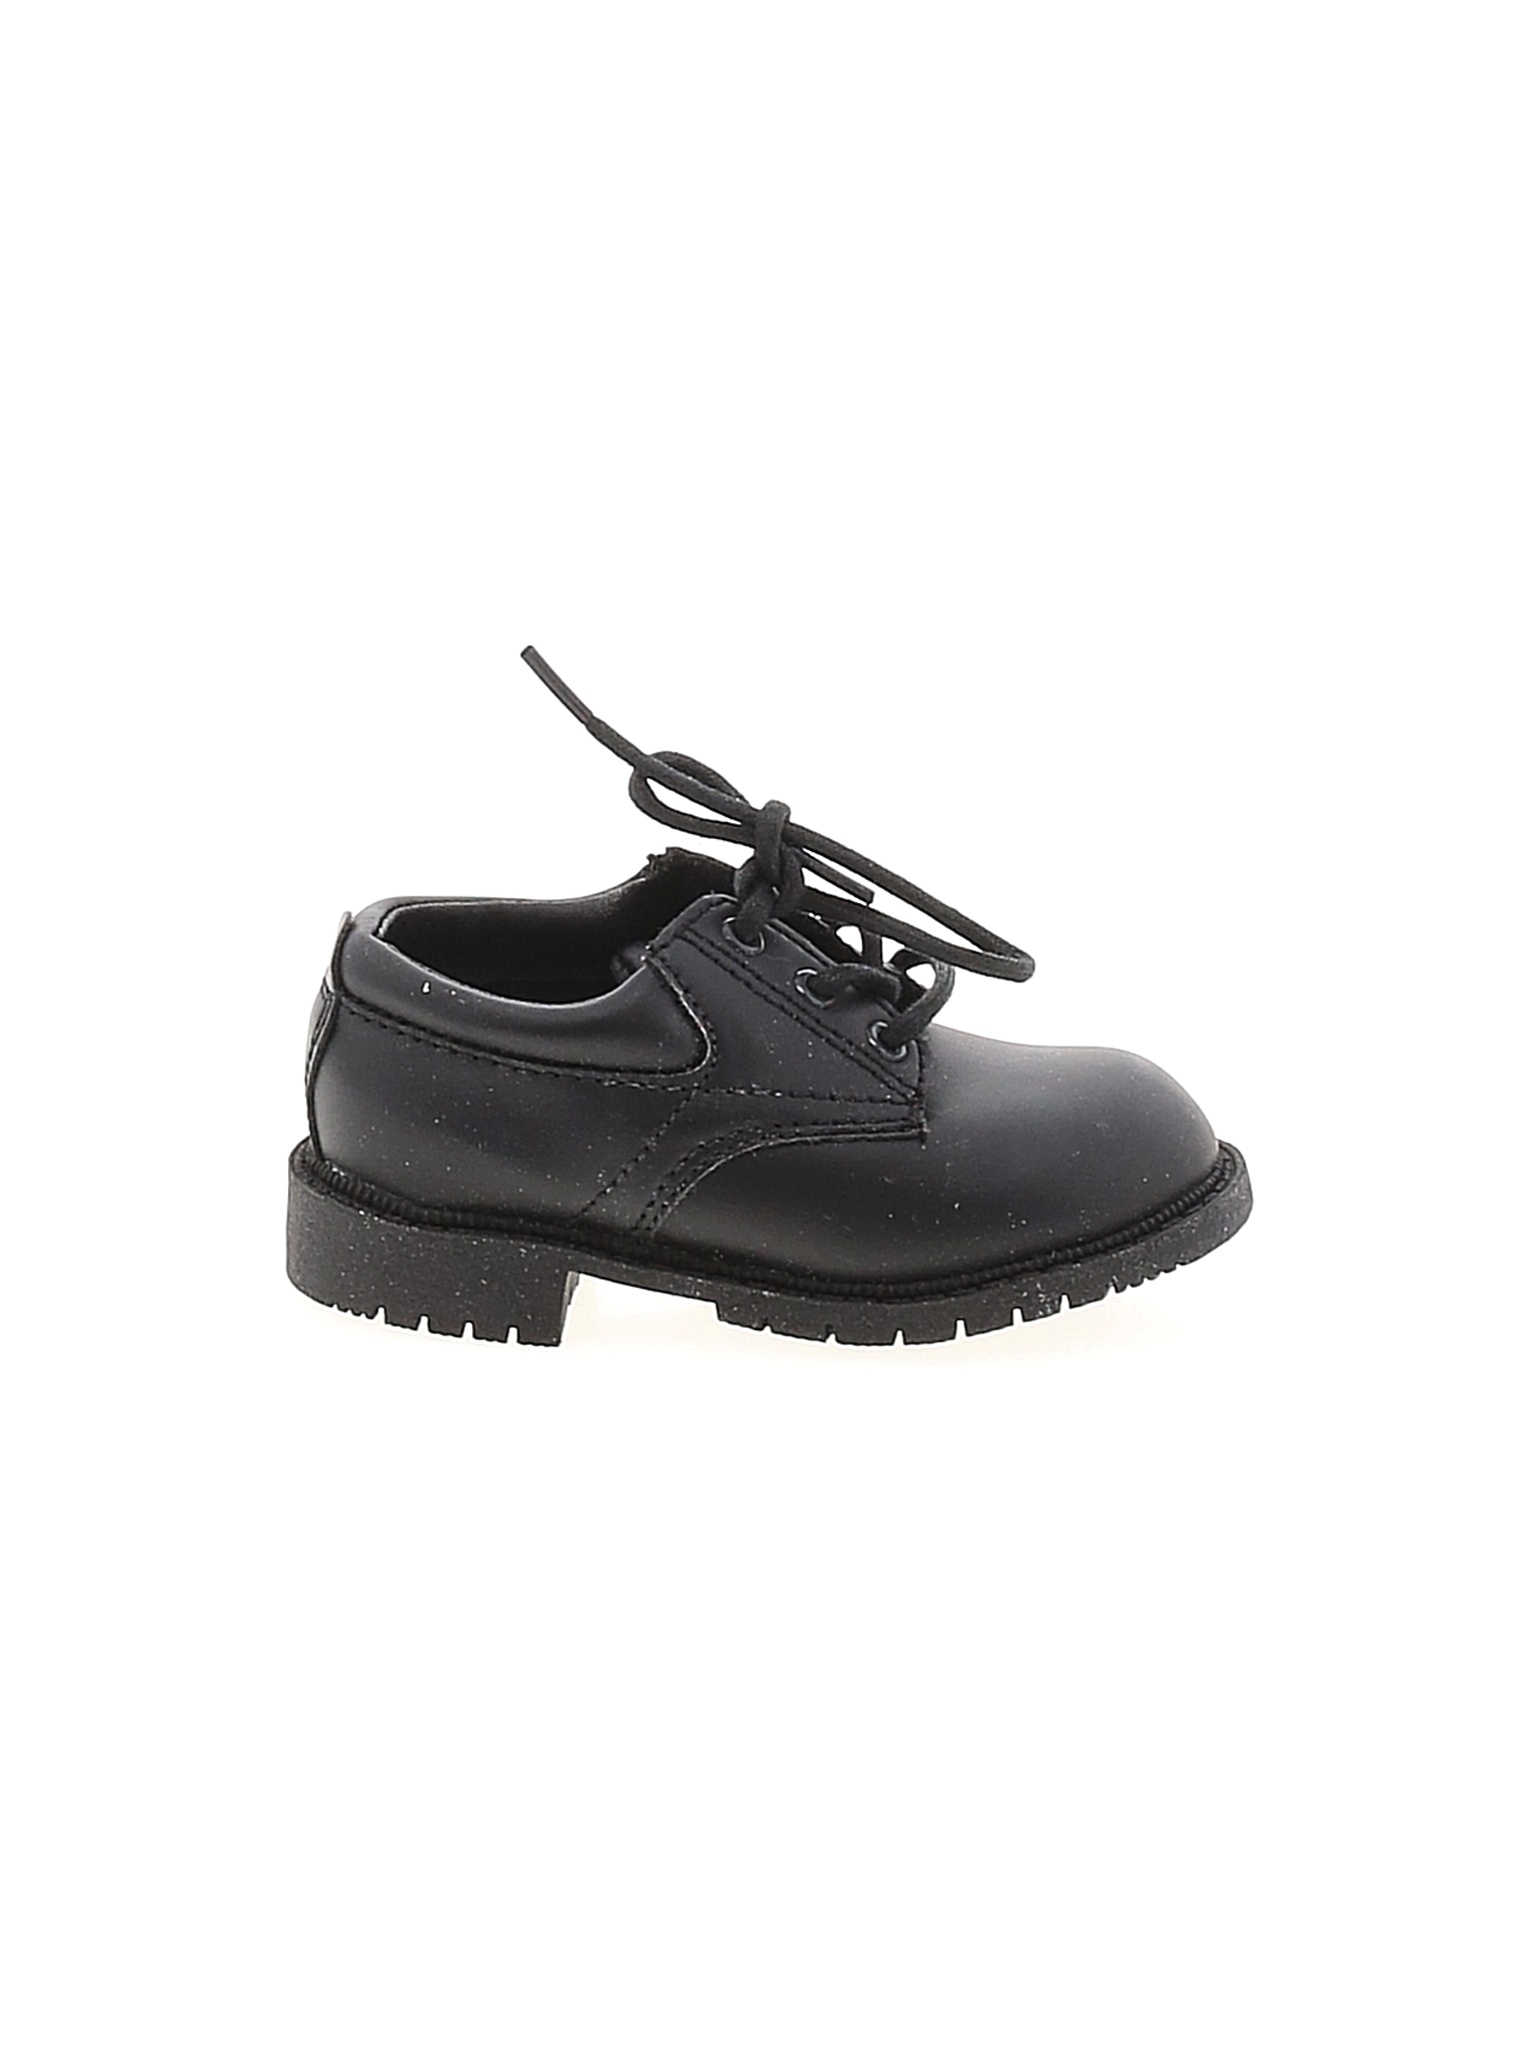 George Boys Black Dress Shoes 6 | eBay